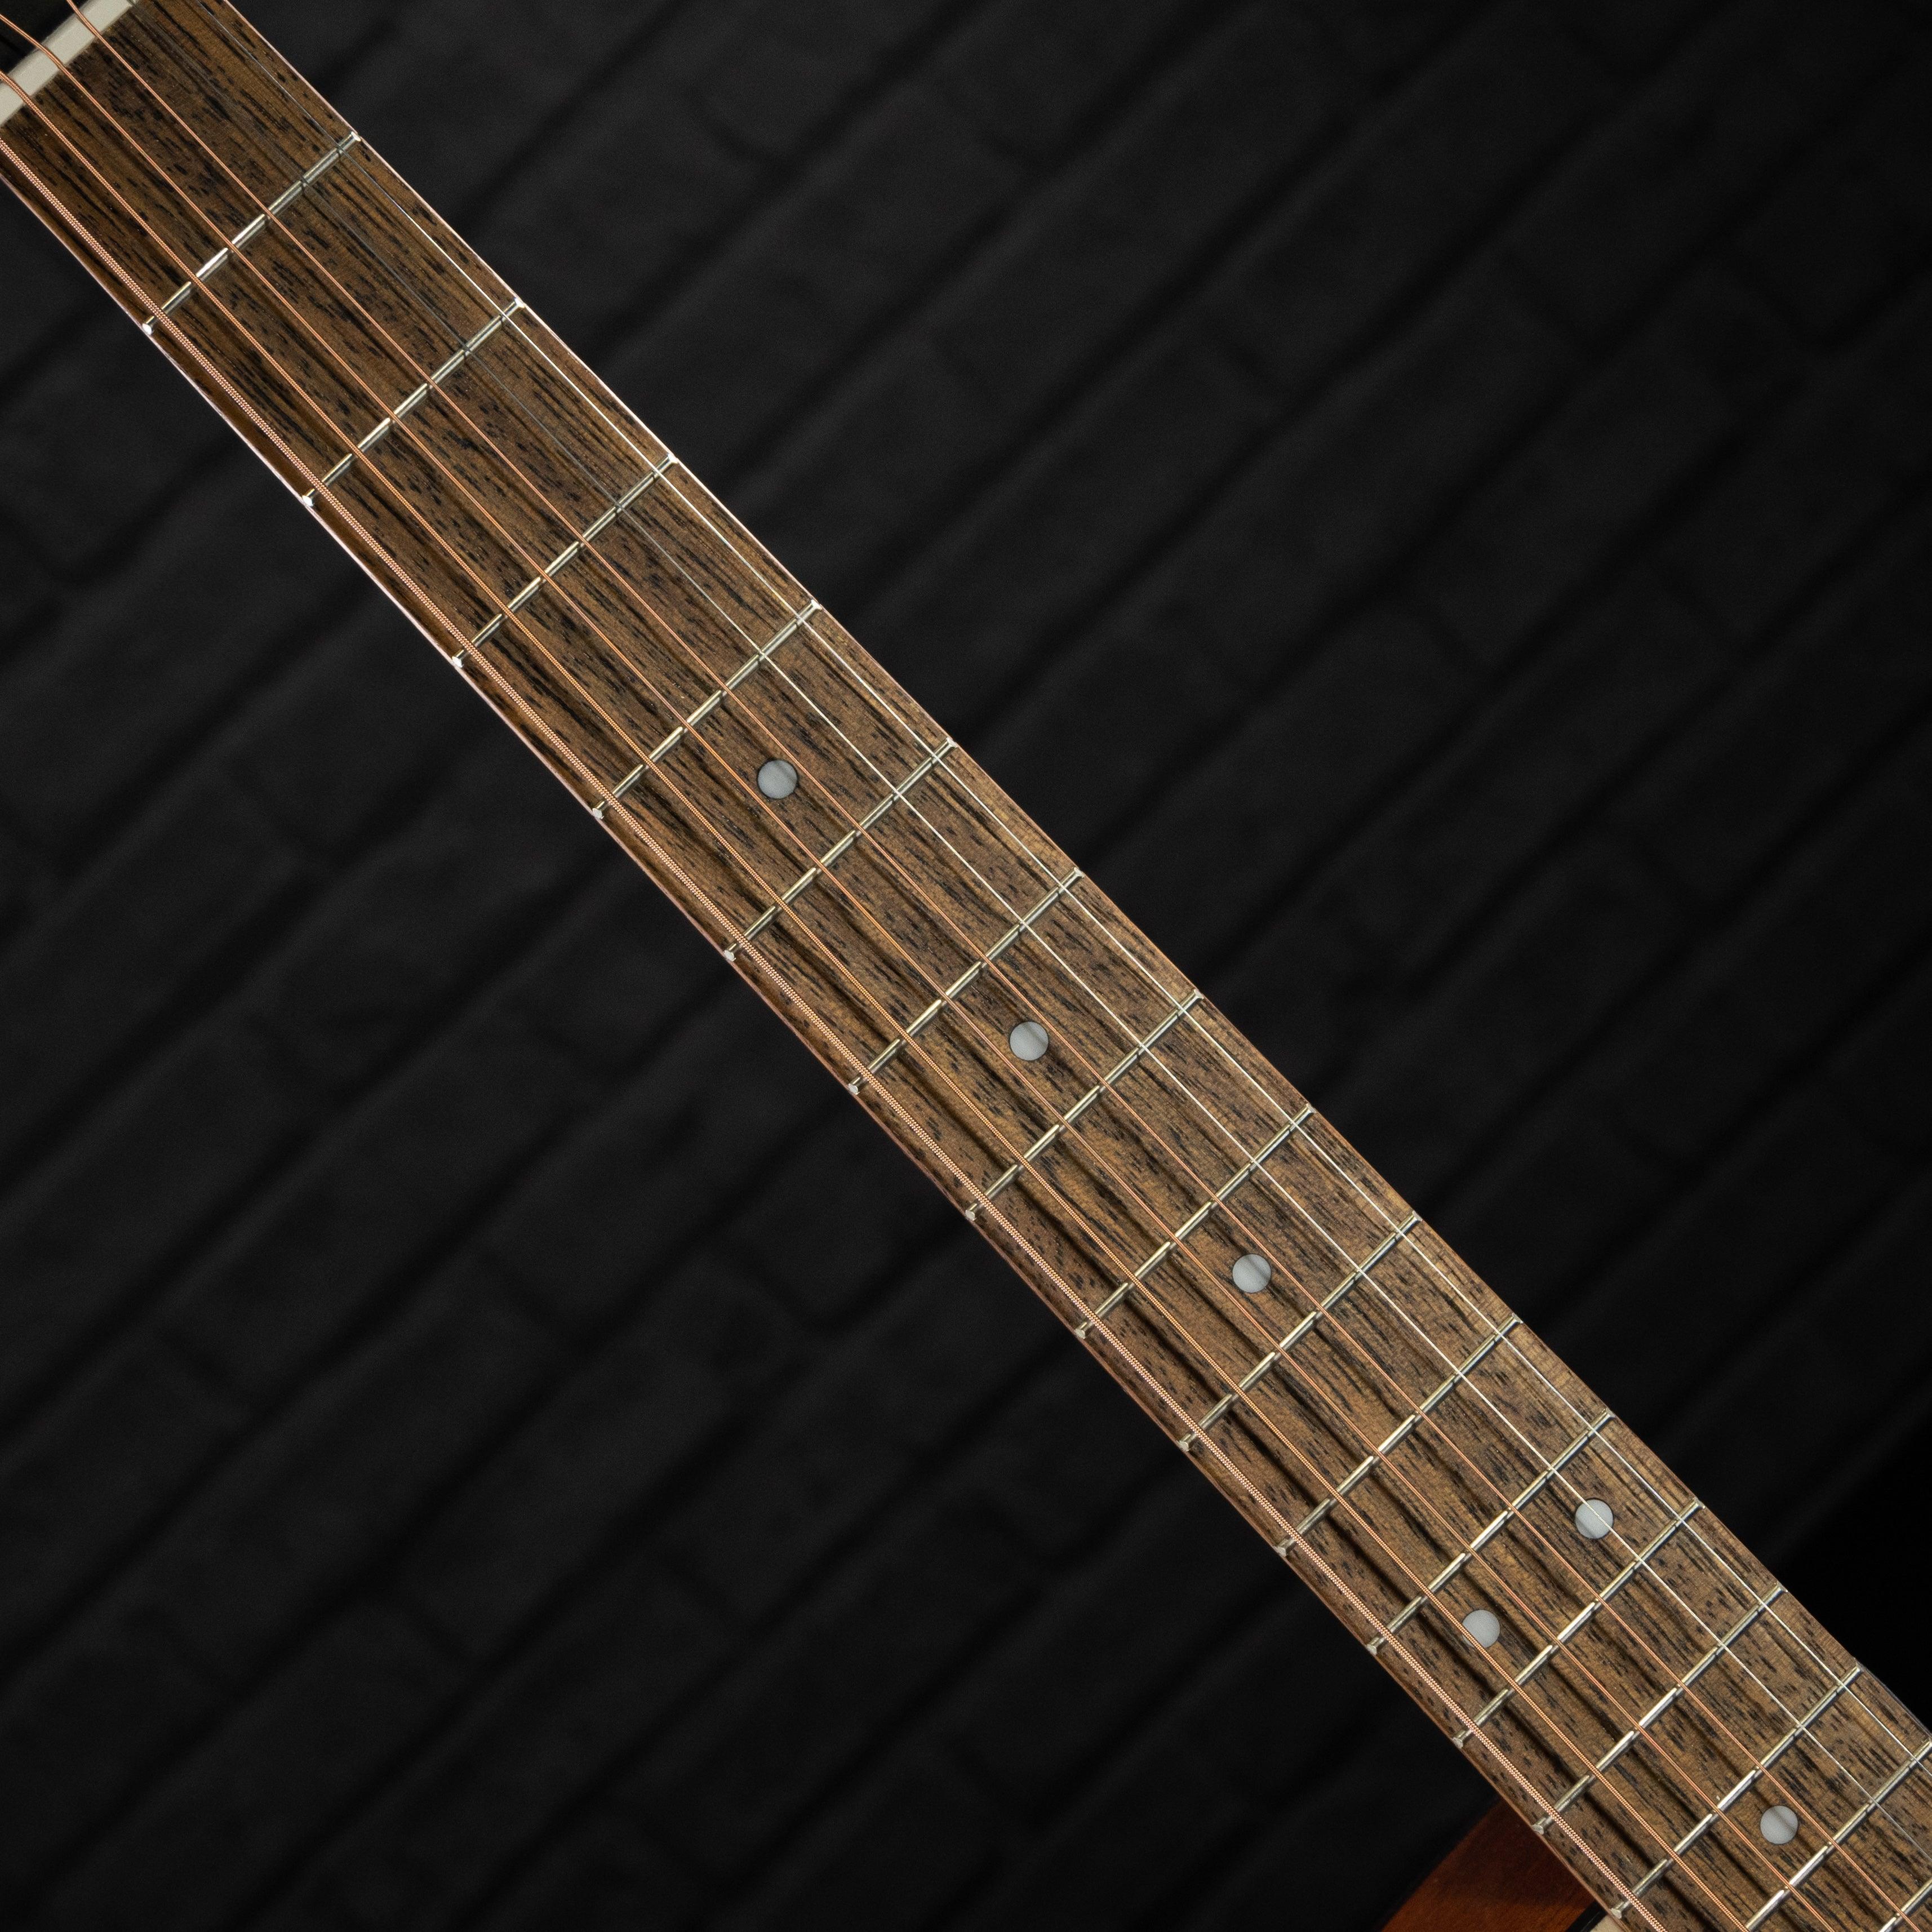 Cort AF515CE Acoustic Electric Guitar - Impulse Music Co.